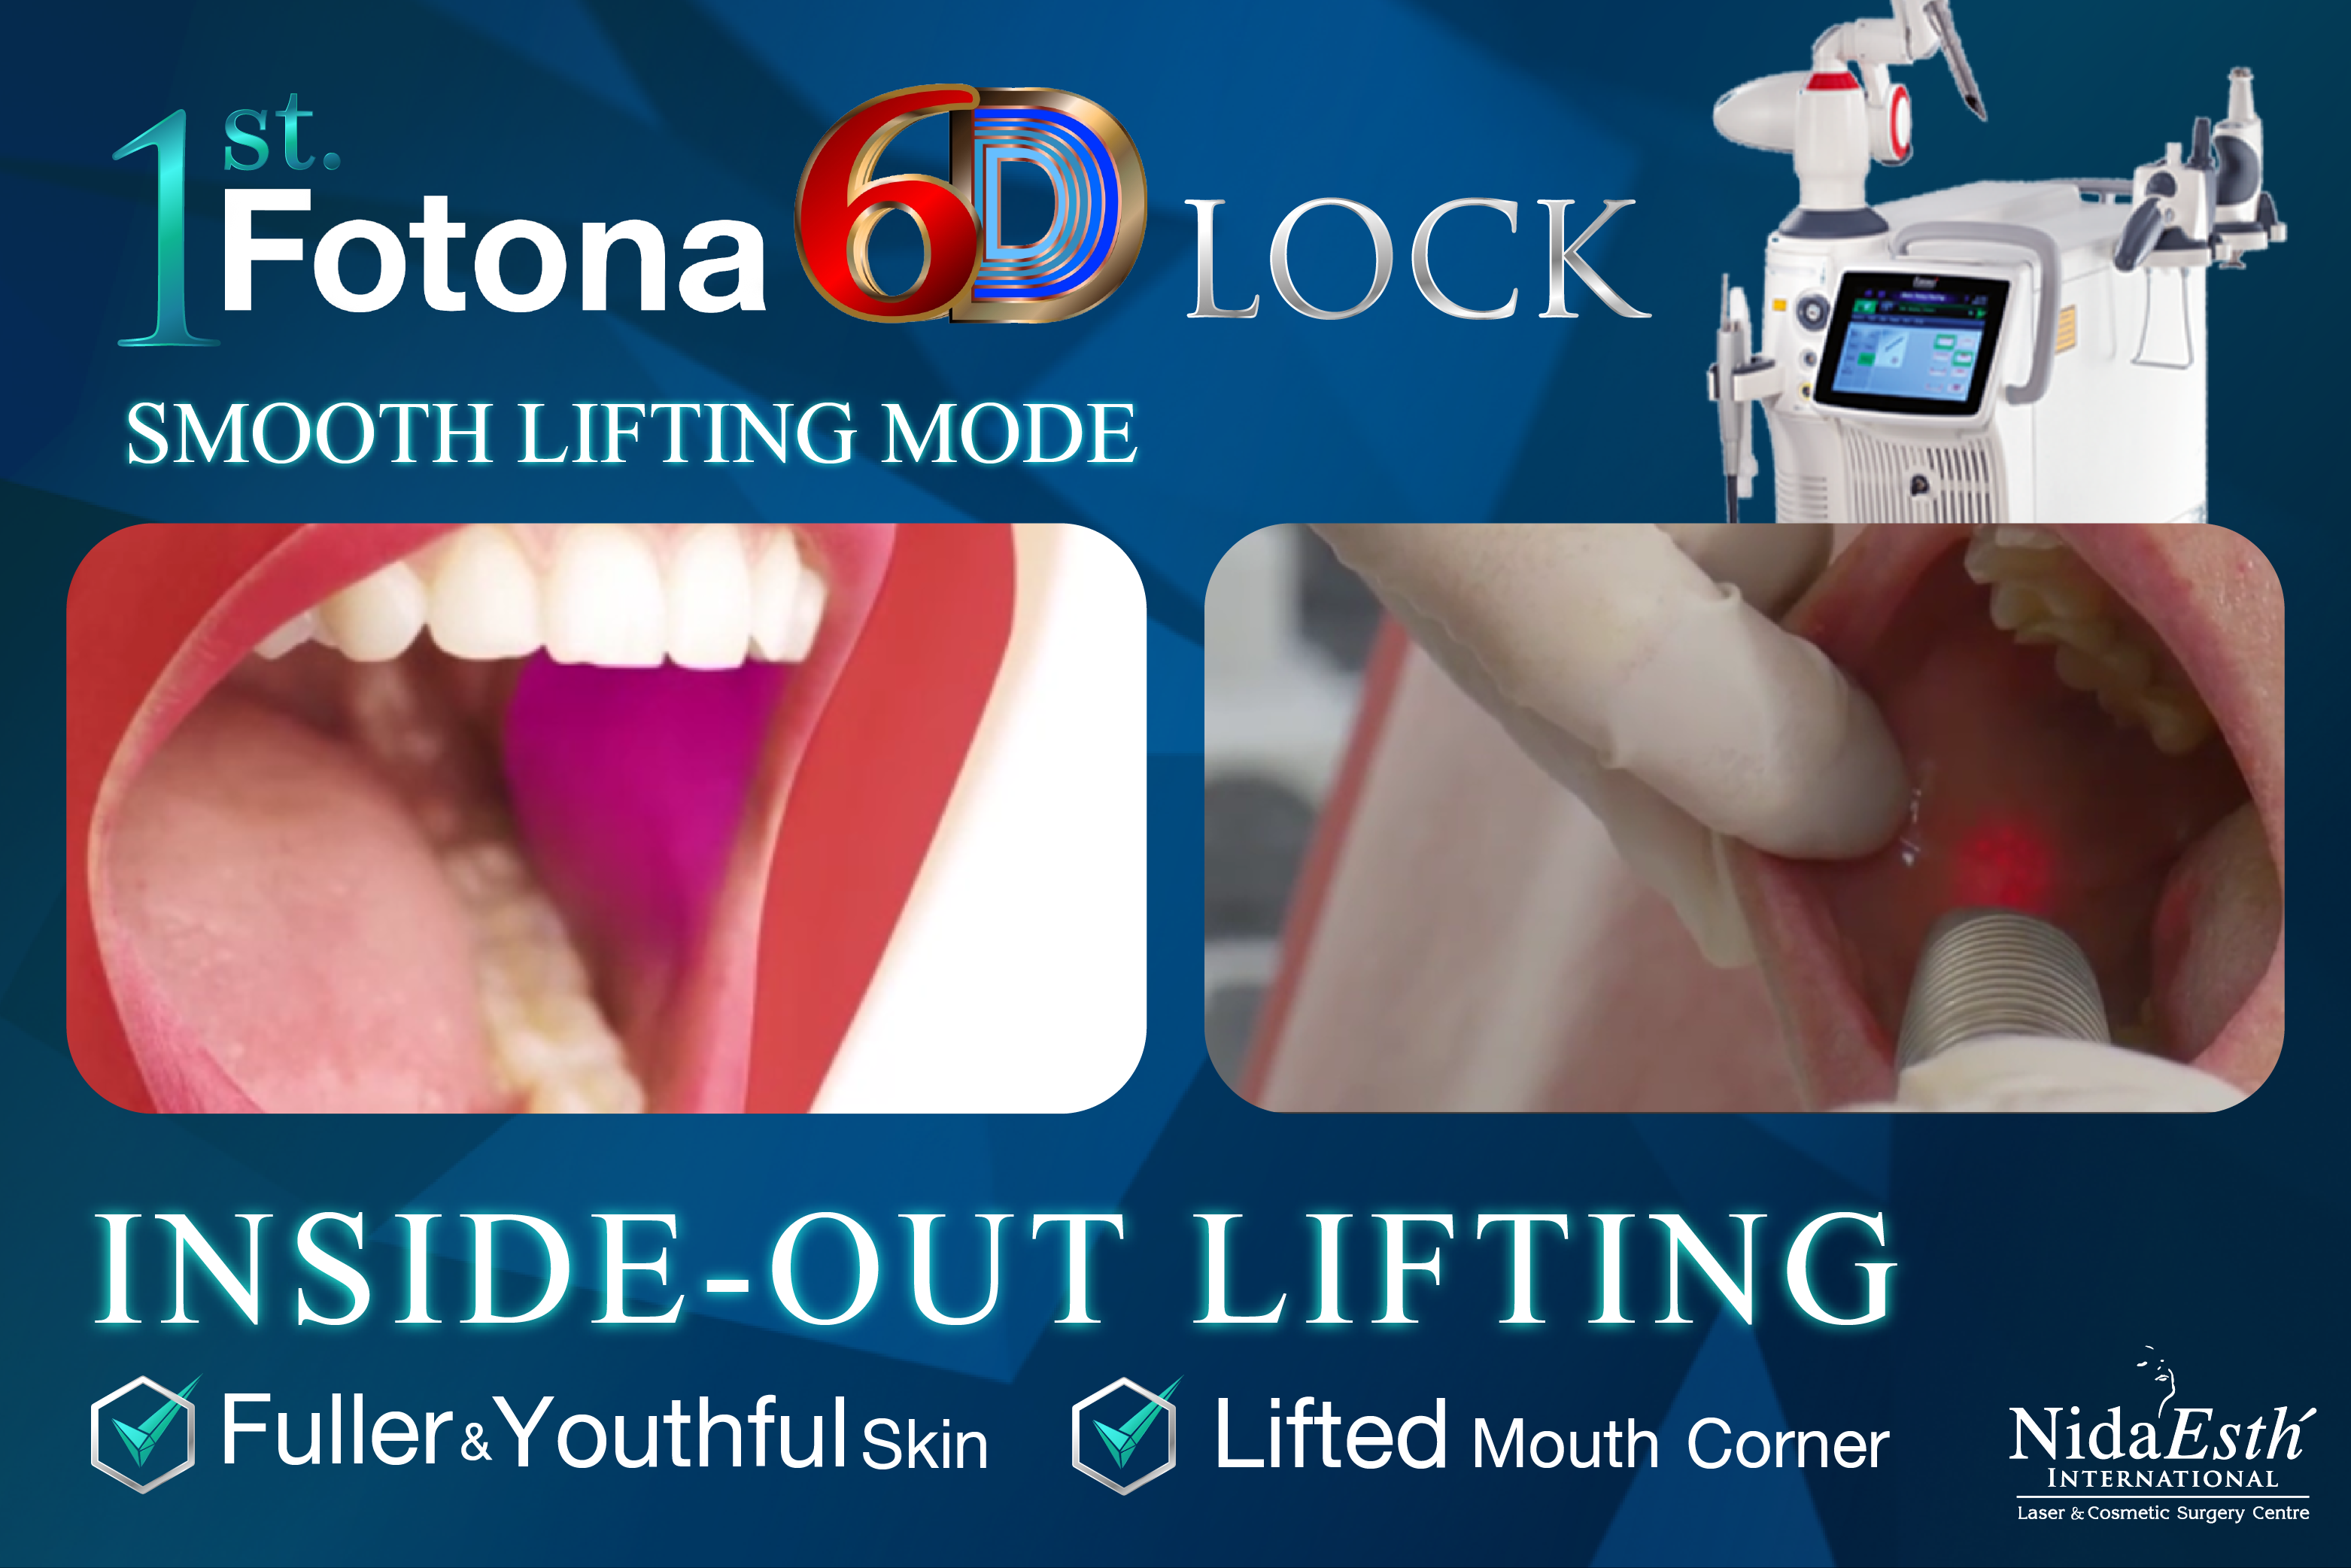 1st Lock: SmoothLifting Mode by Fotona 6D